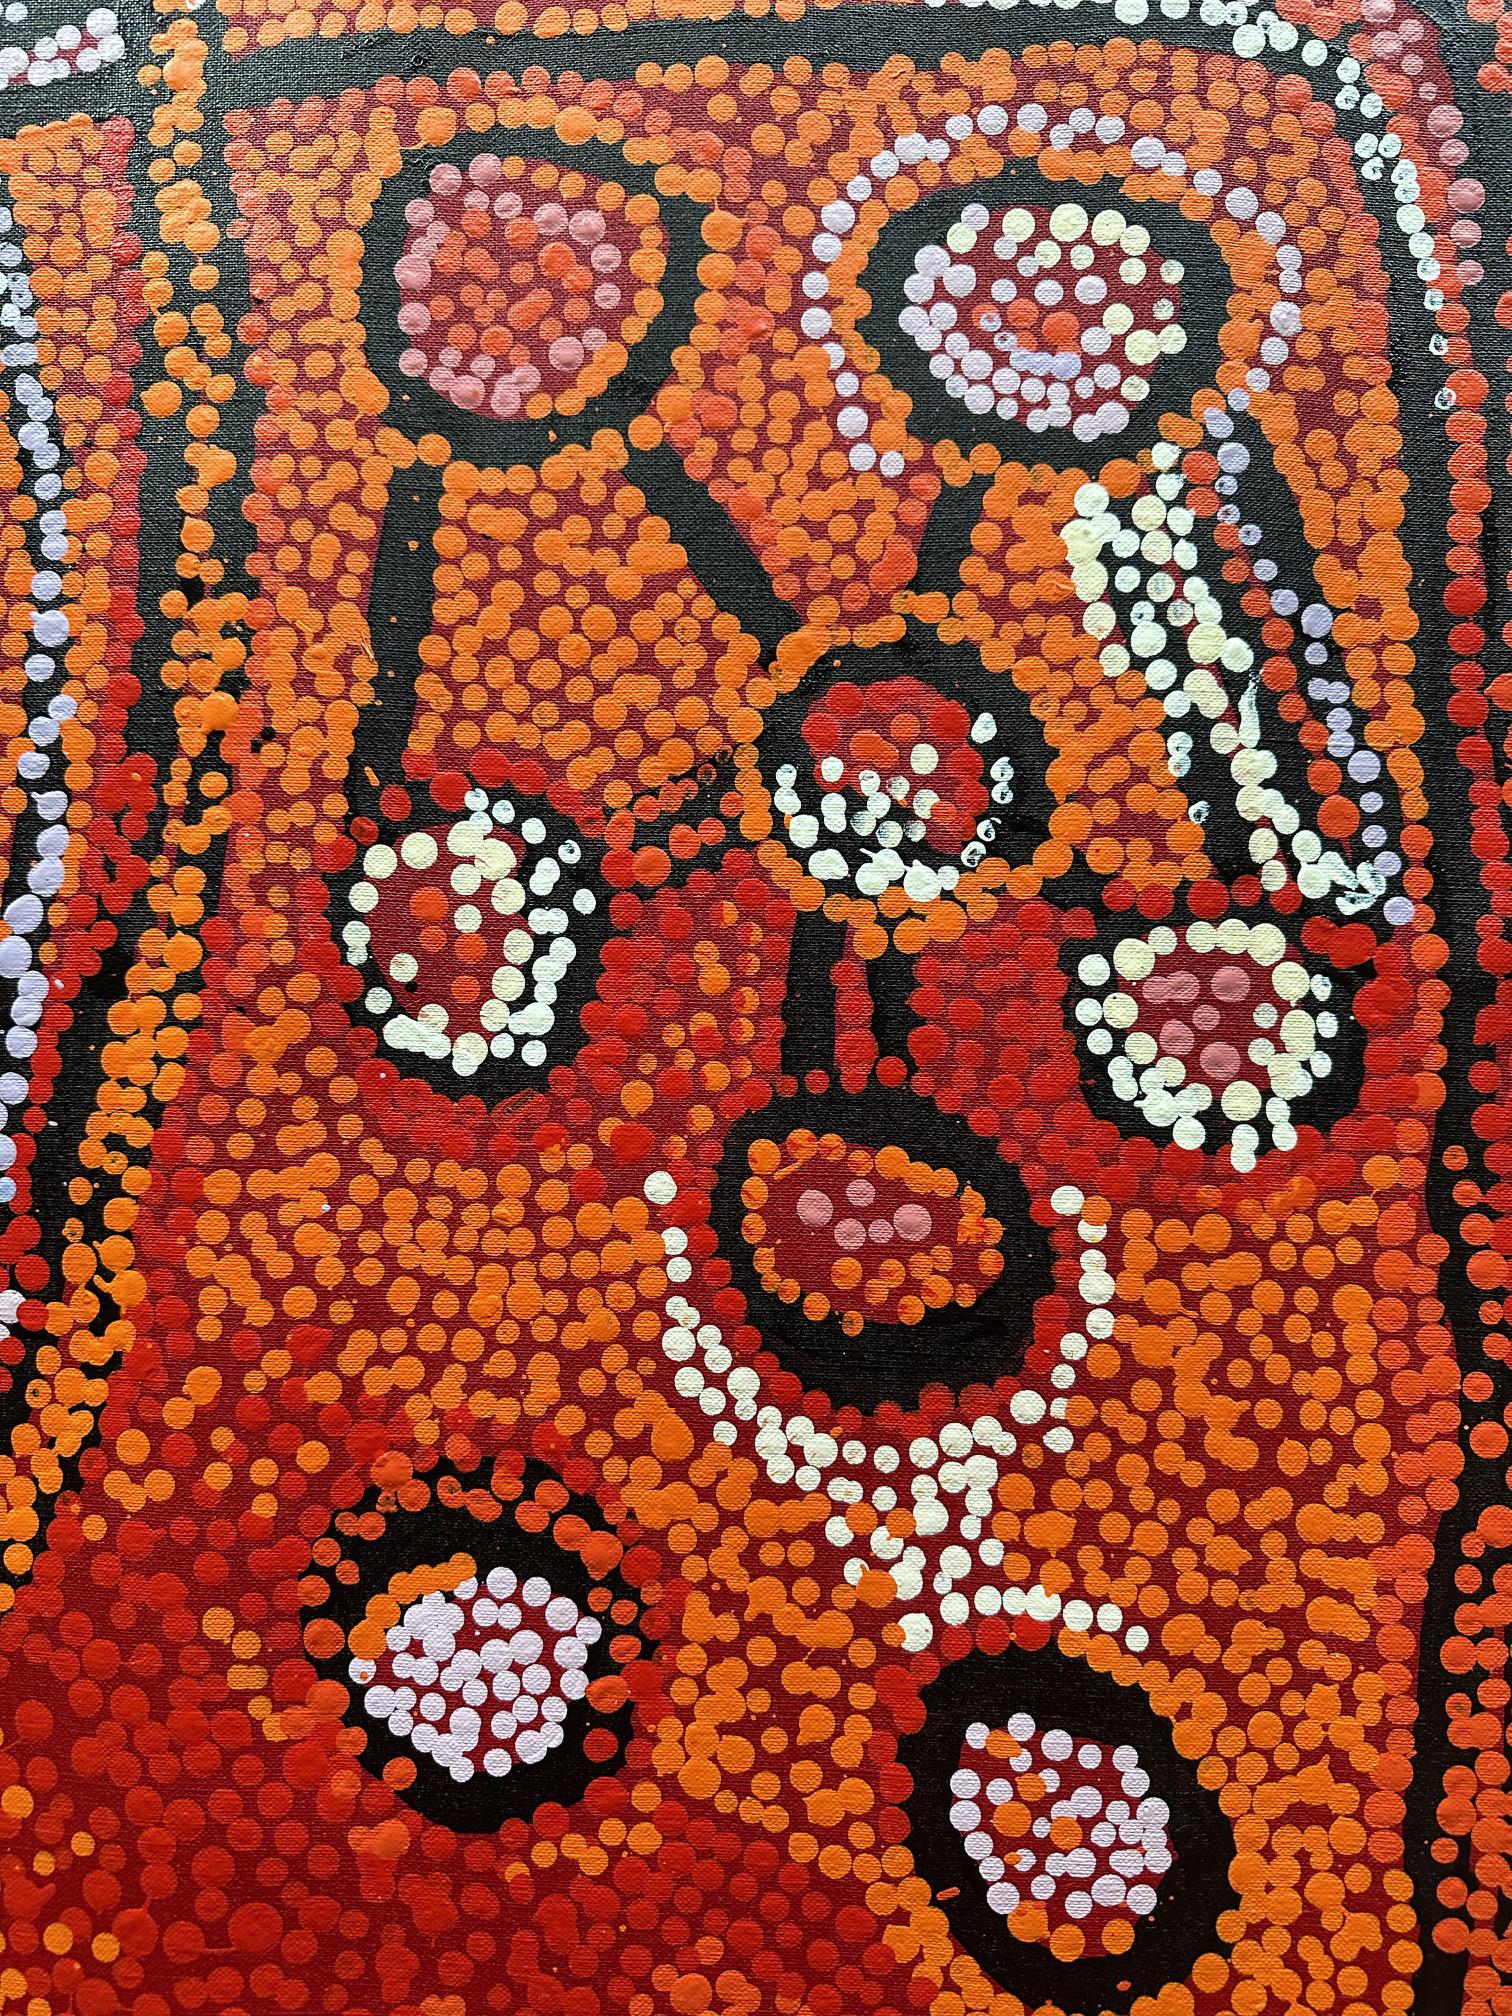 Contemporary Australian Aboriginal Painting by Naata Nungurrayi 4